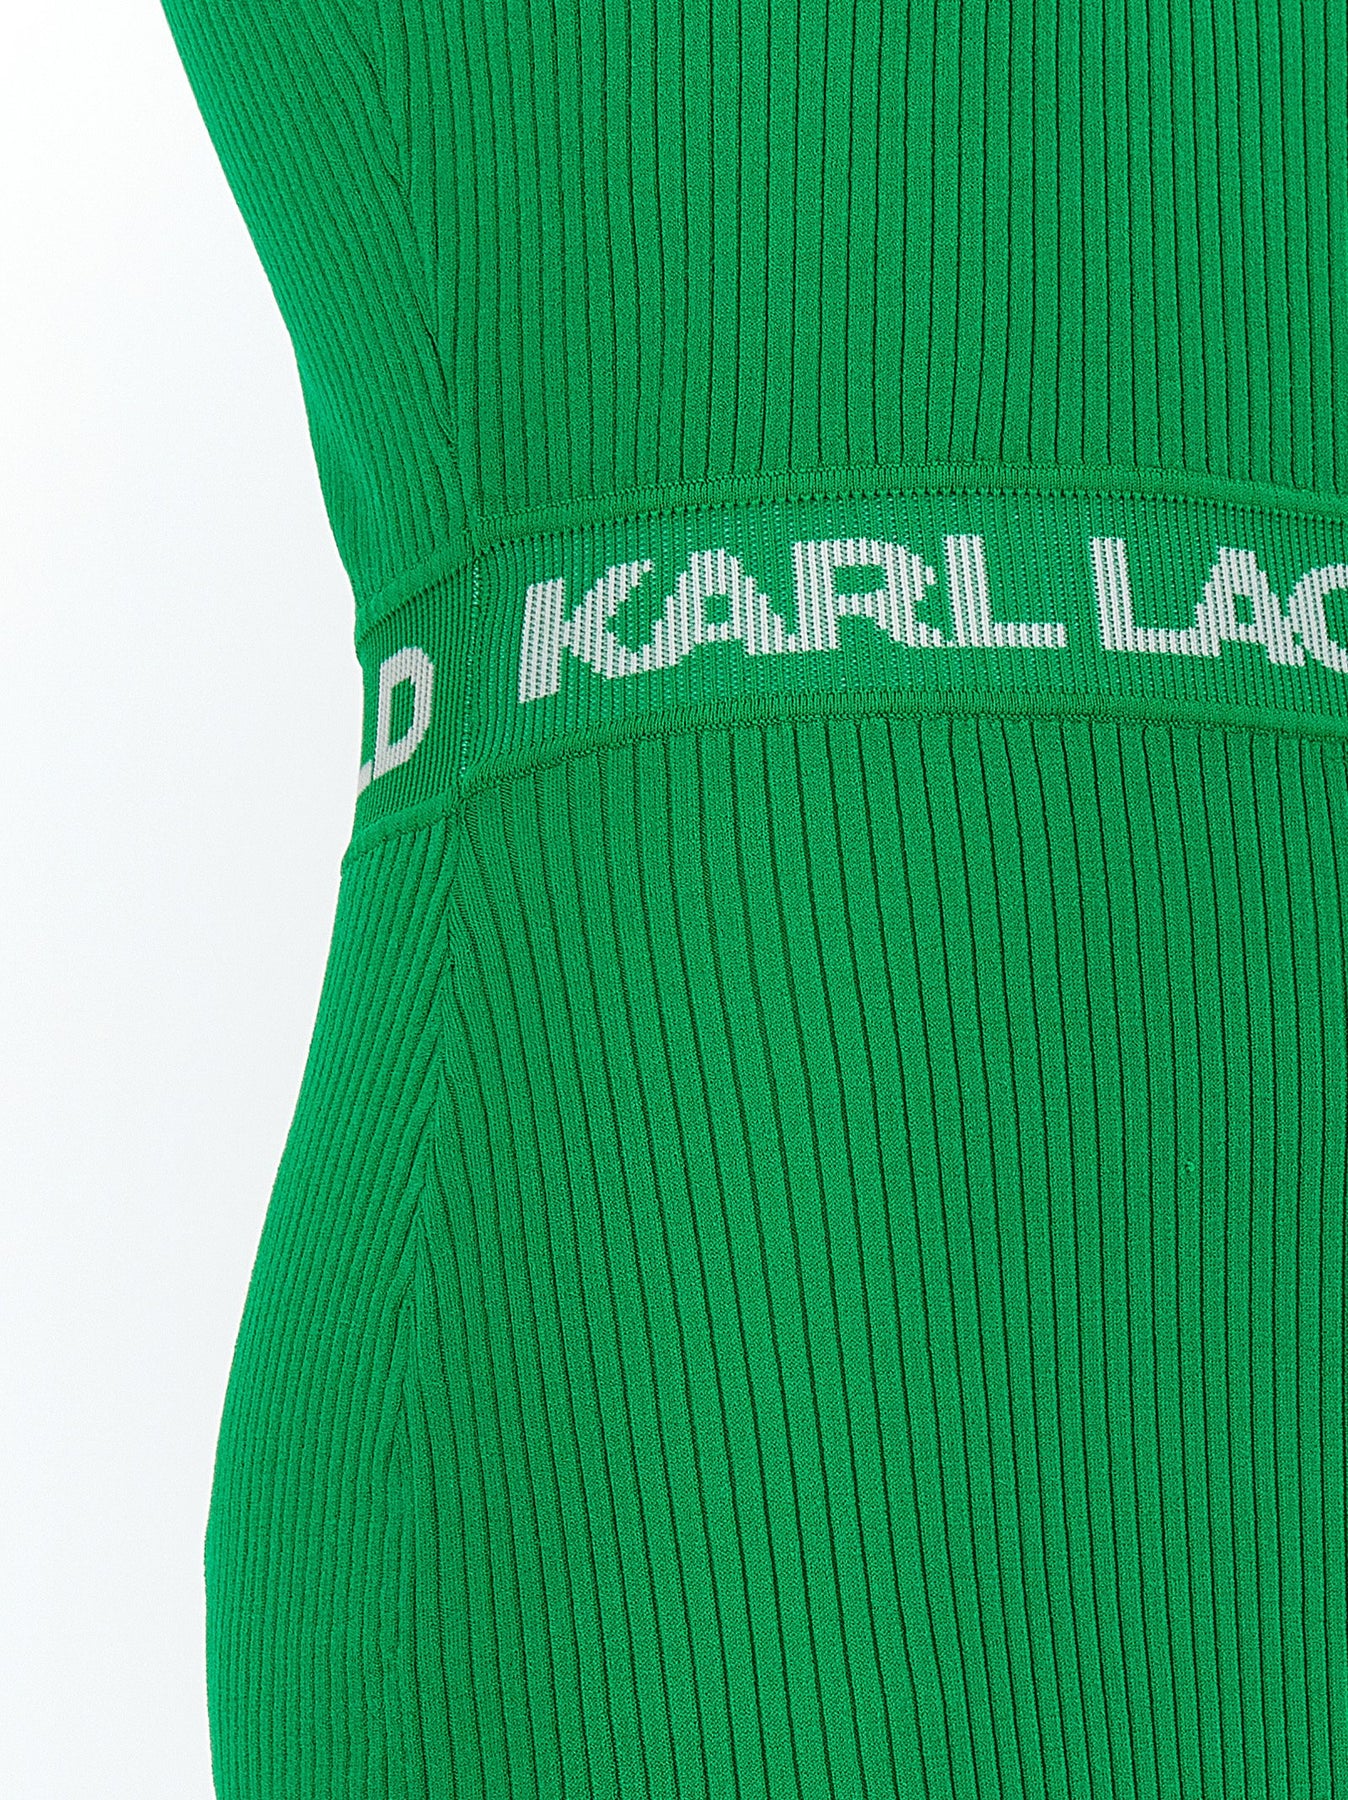 Shop Karl Lagerfeld Logo Knit Dress Dresses